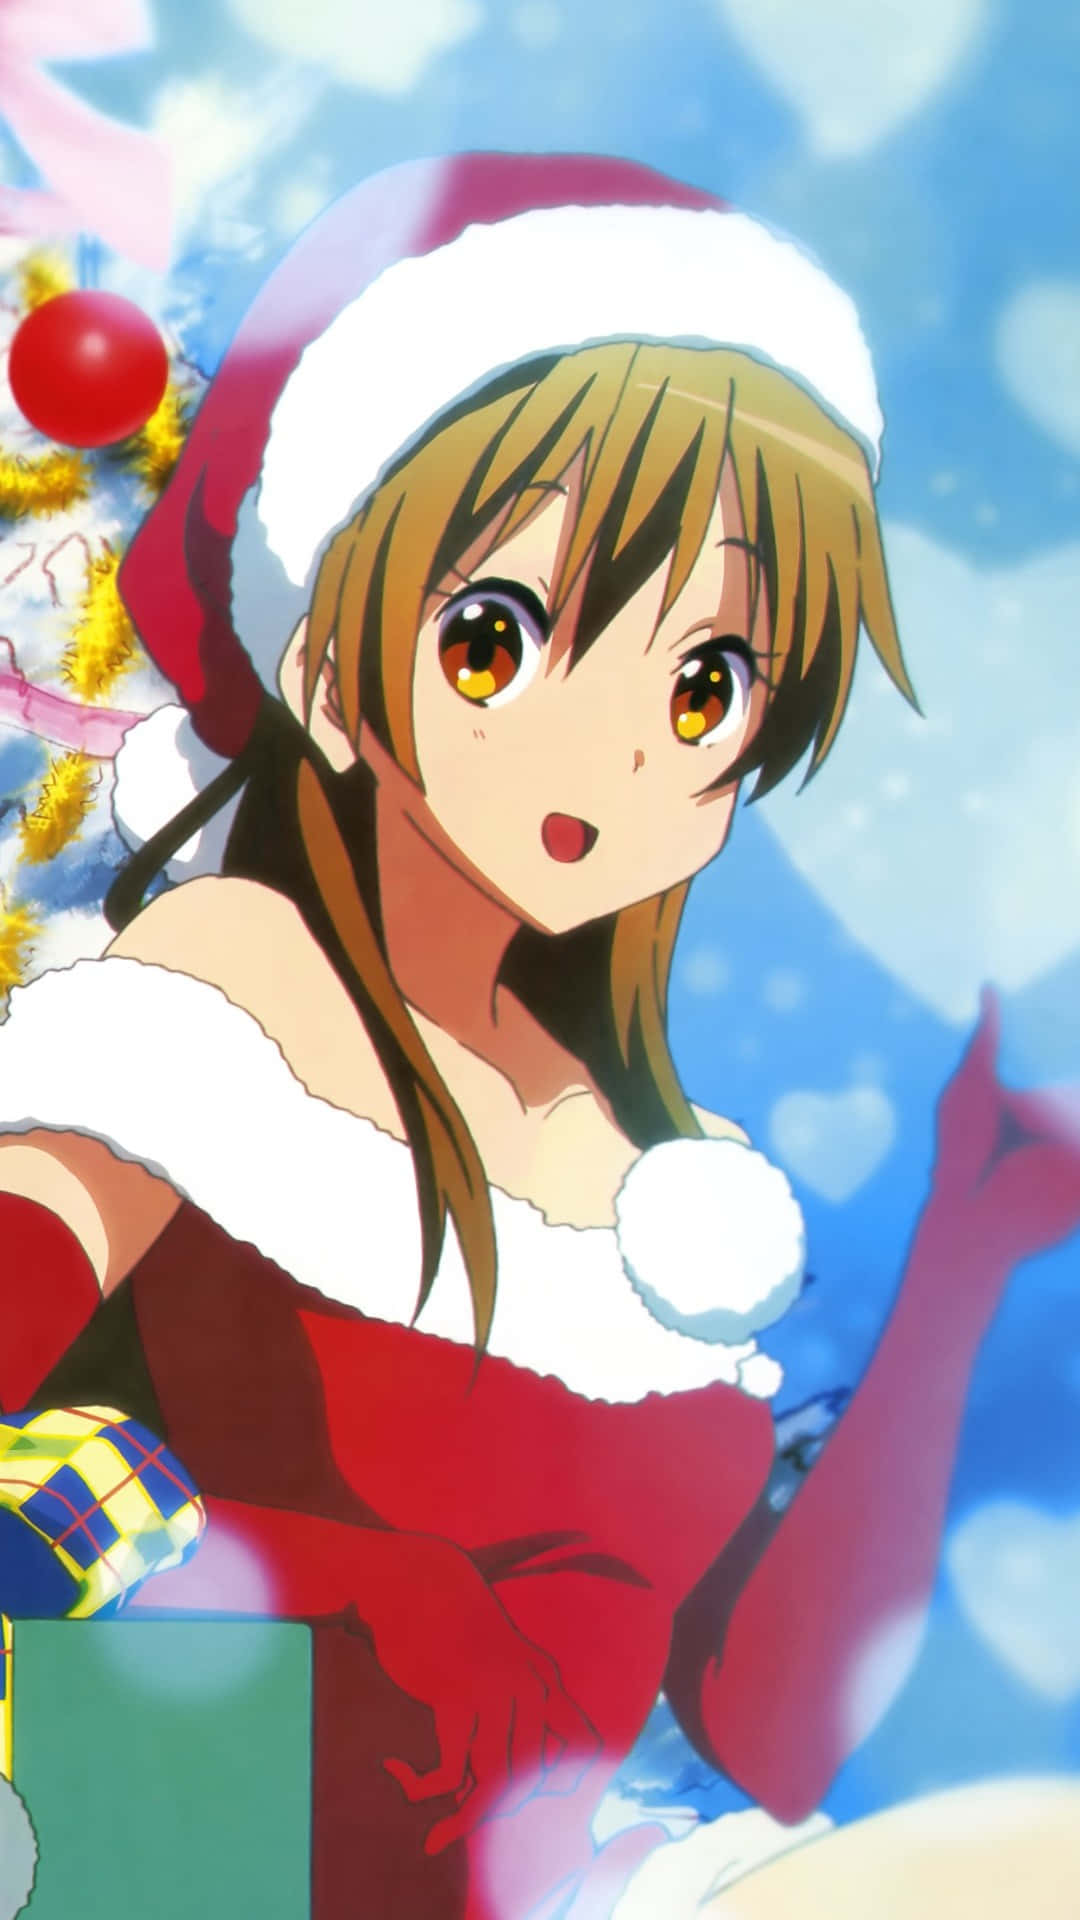 Imagende Perfil De Anime De Navidad: Personaje De Anime De A-1. Fondo de pantalla